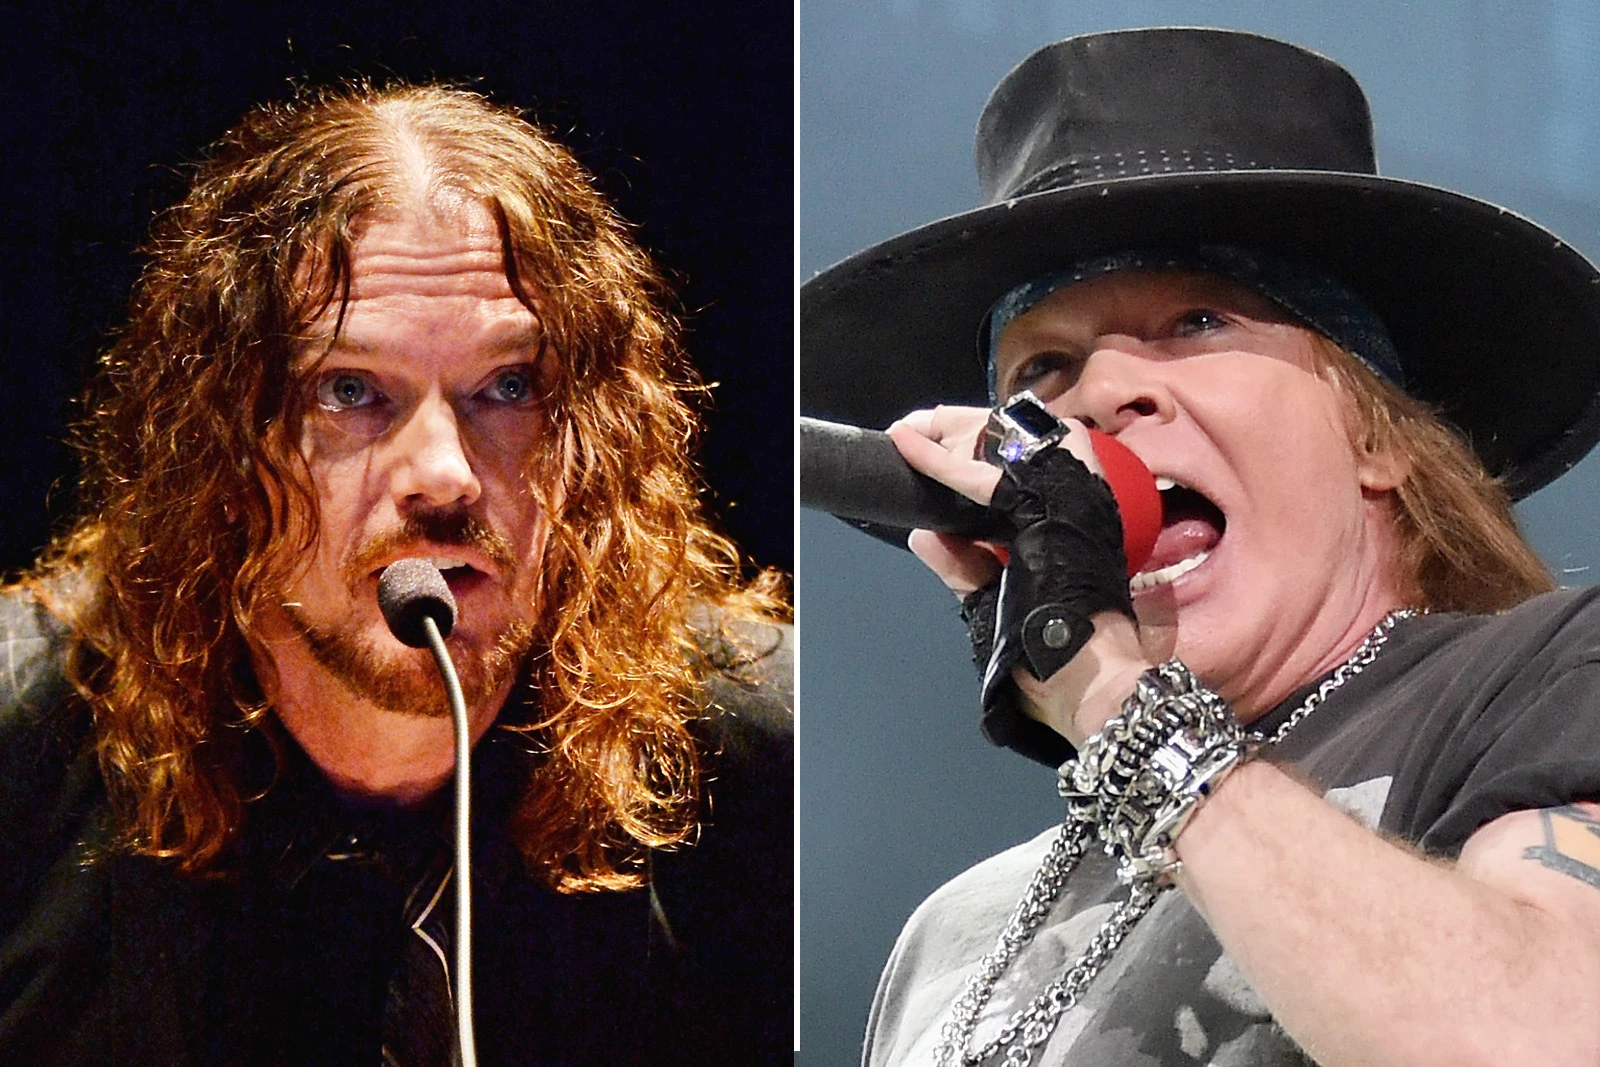 Axl Rose Misrepresented Says Dizzy Reed Of Guns N Roses